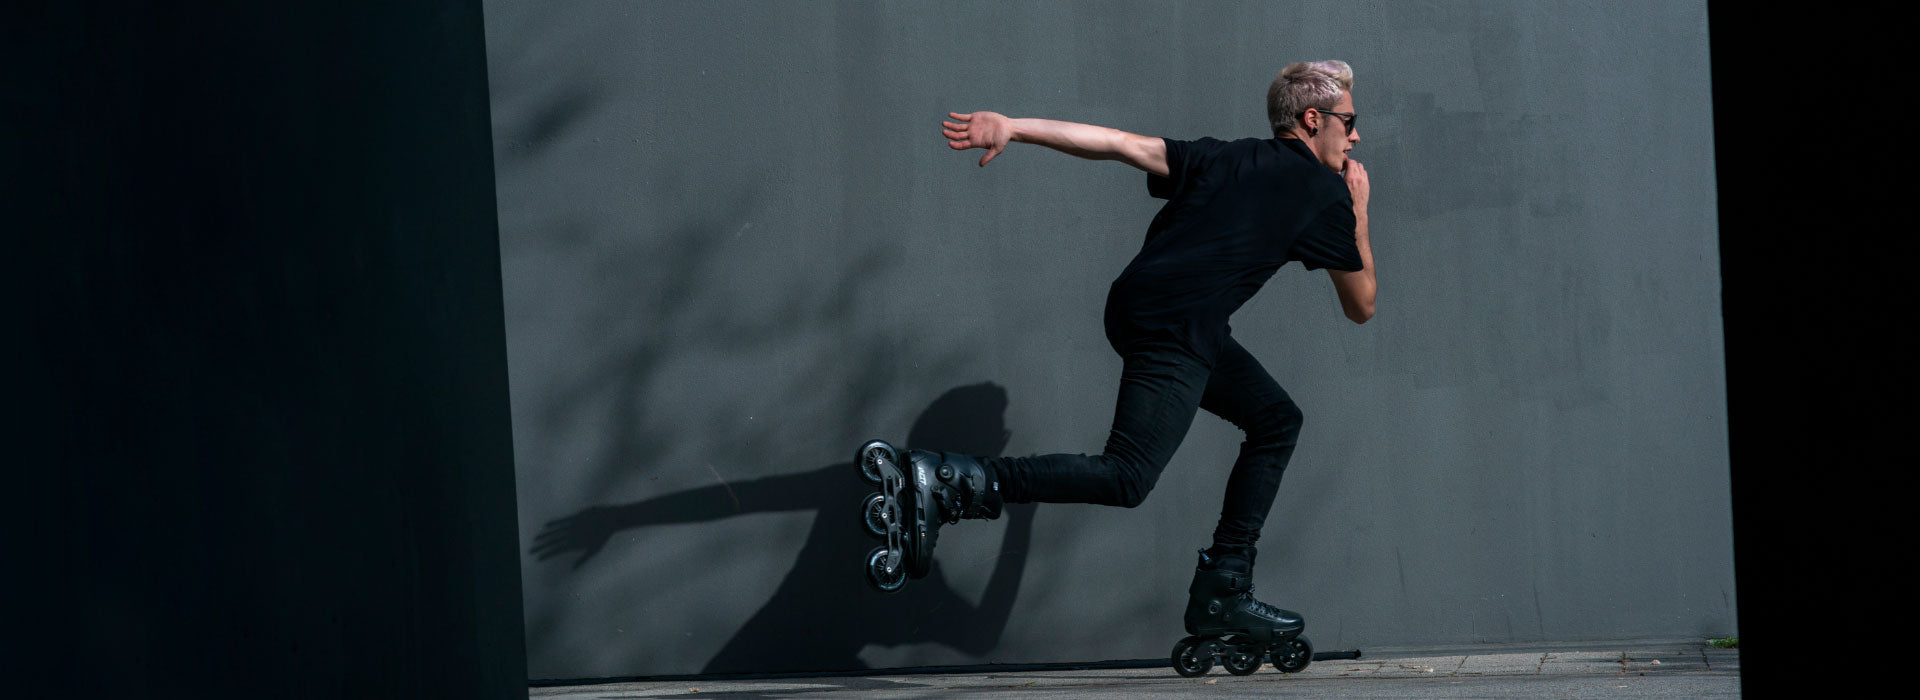 Man with sunglasses a black shirt and black pants skating on black Powerslide inline skates